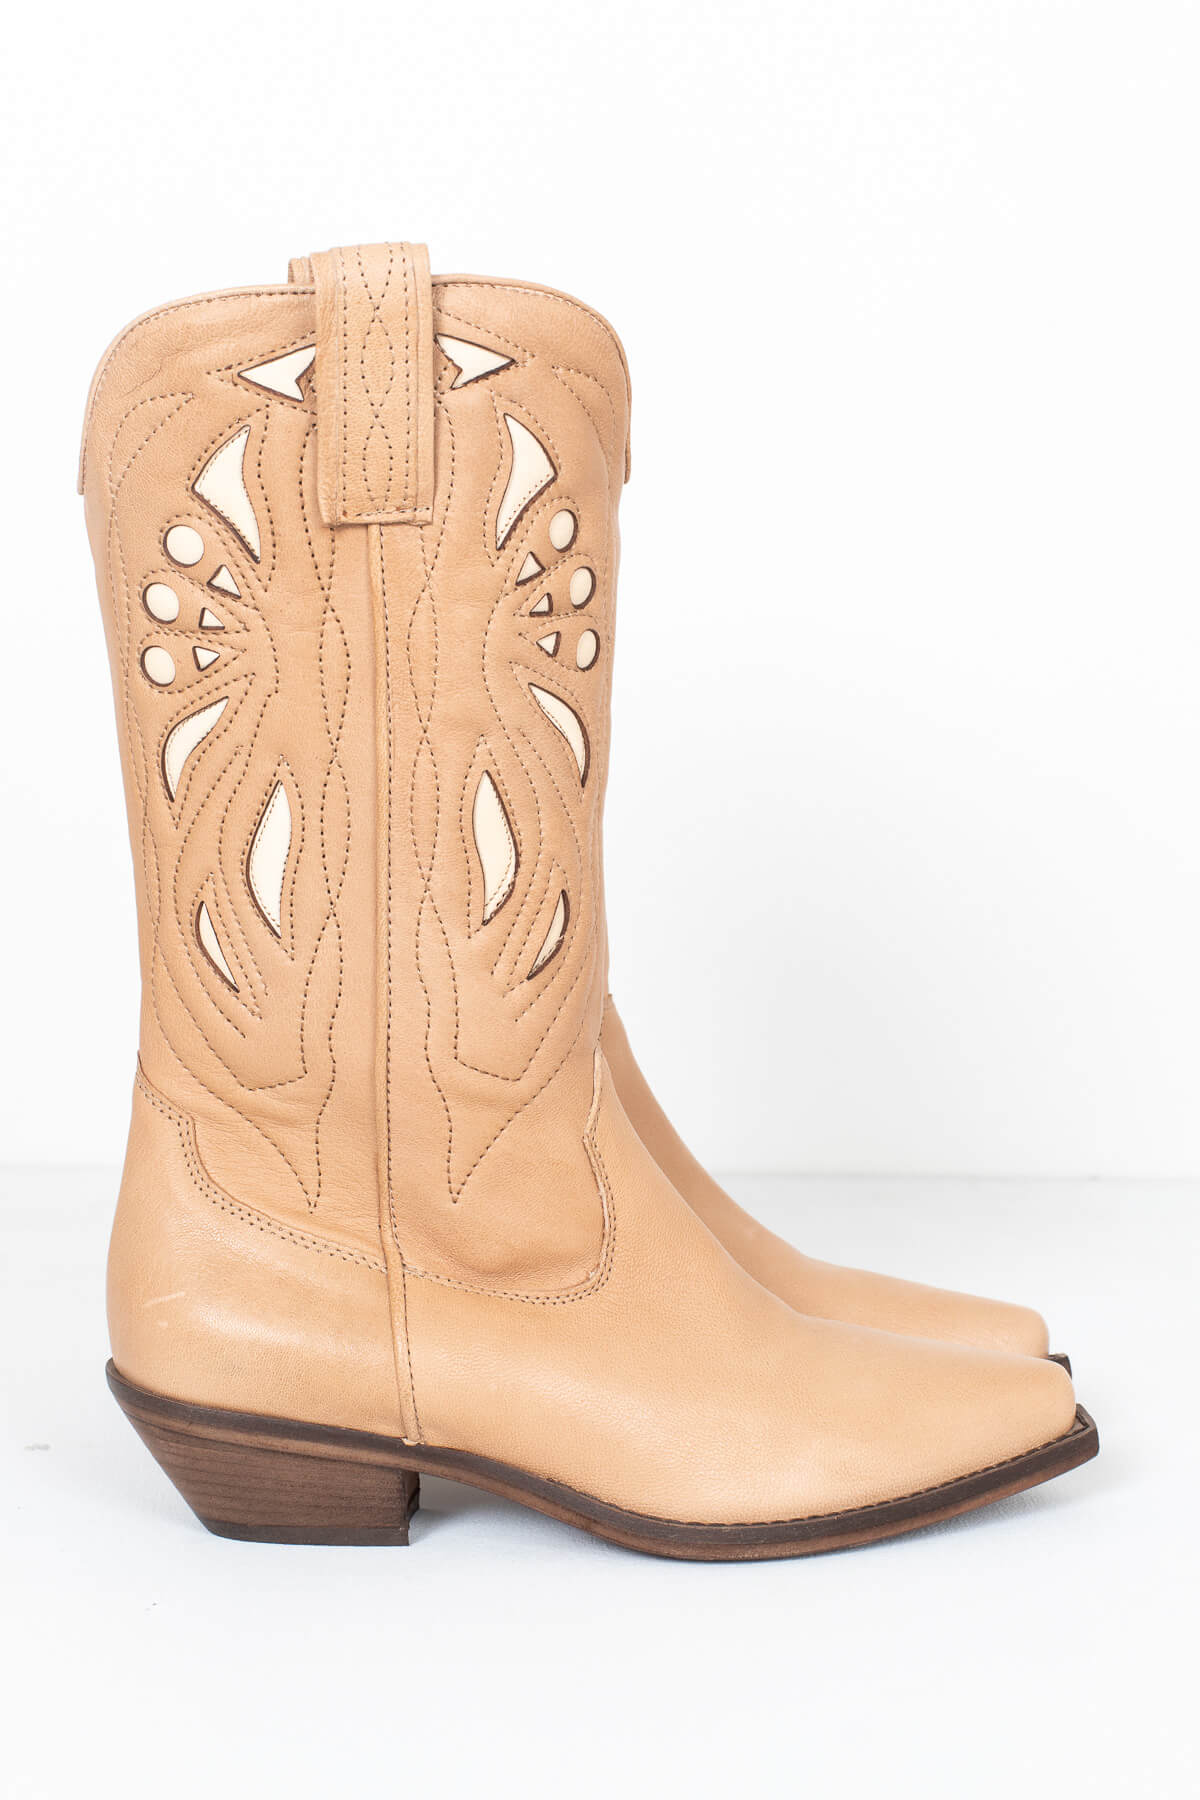 beige cowboy boots for women